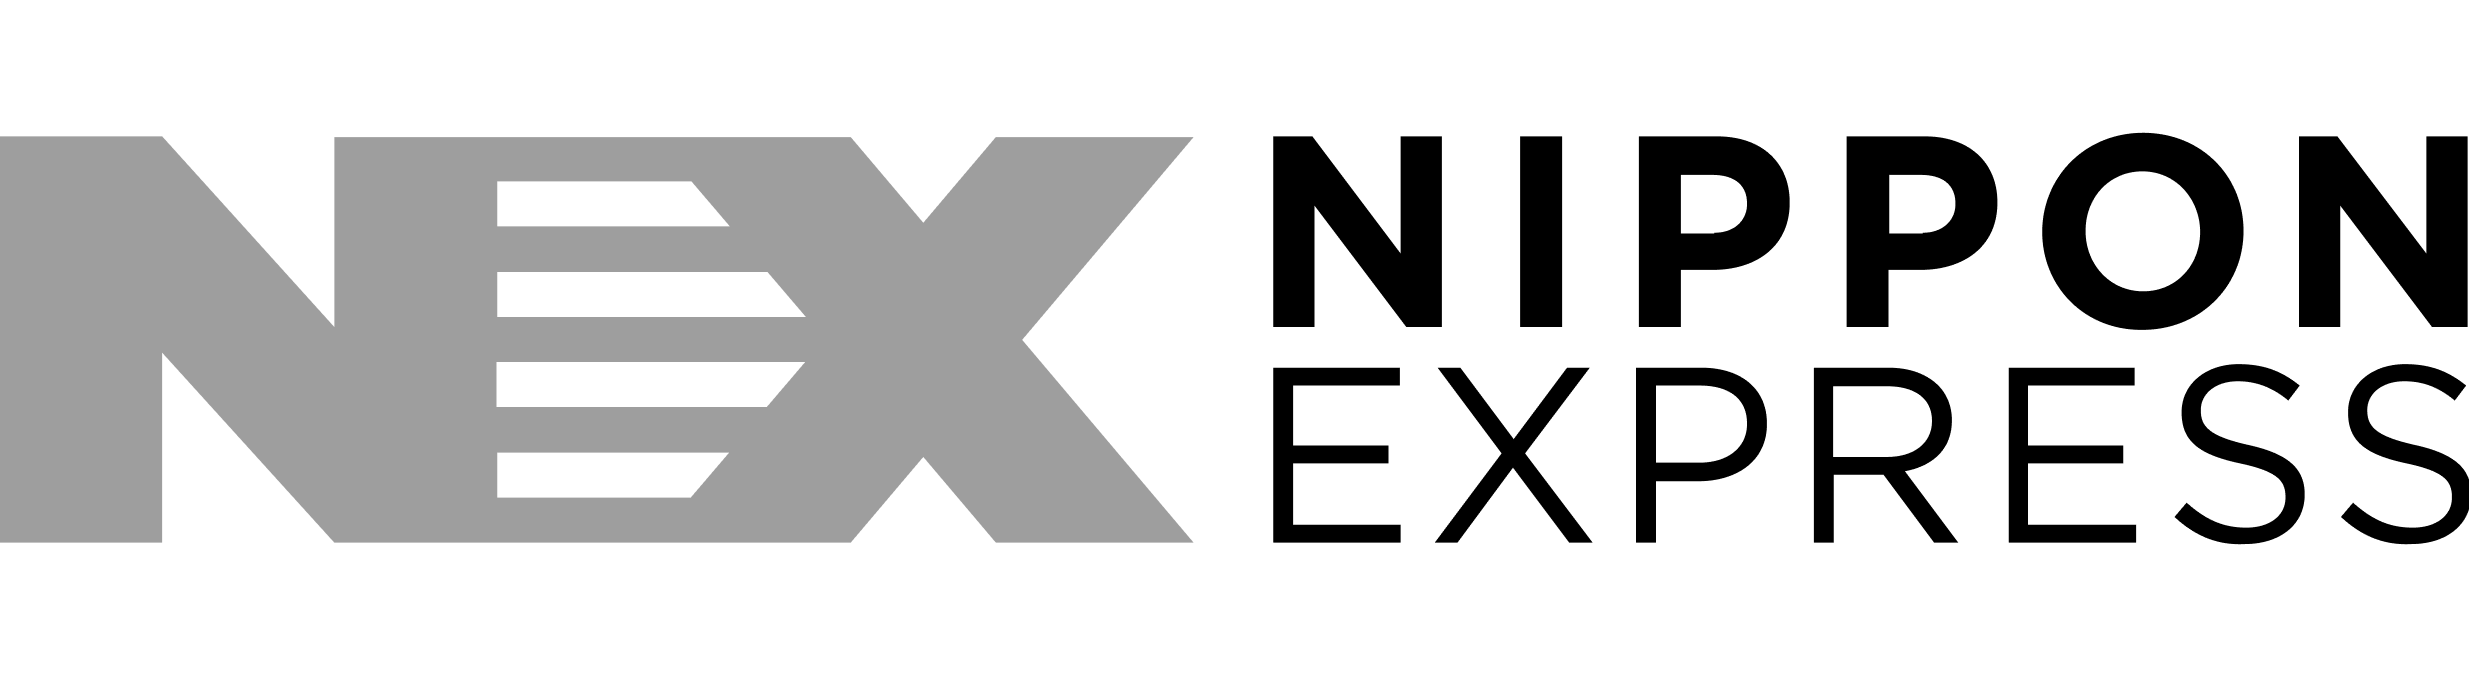 monochromatic nippon express logo